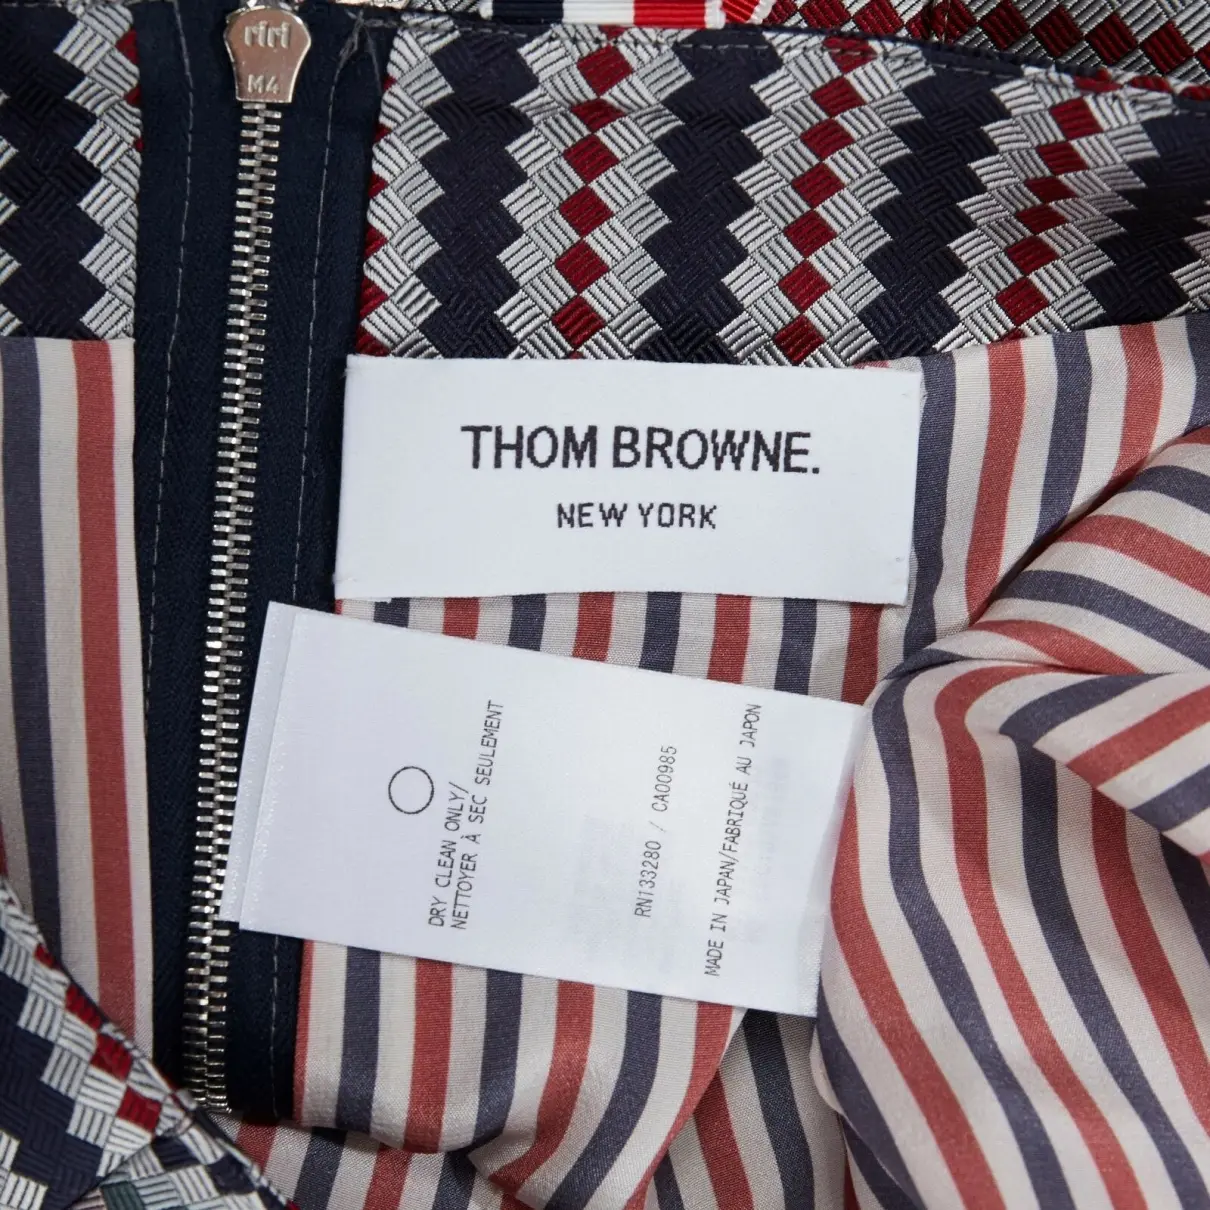 Thom Browne Mini skirt for sale